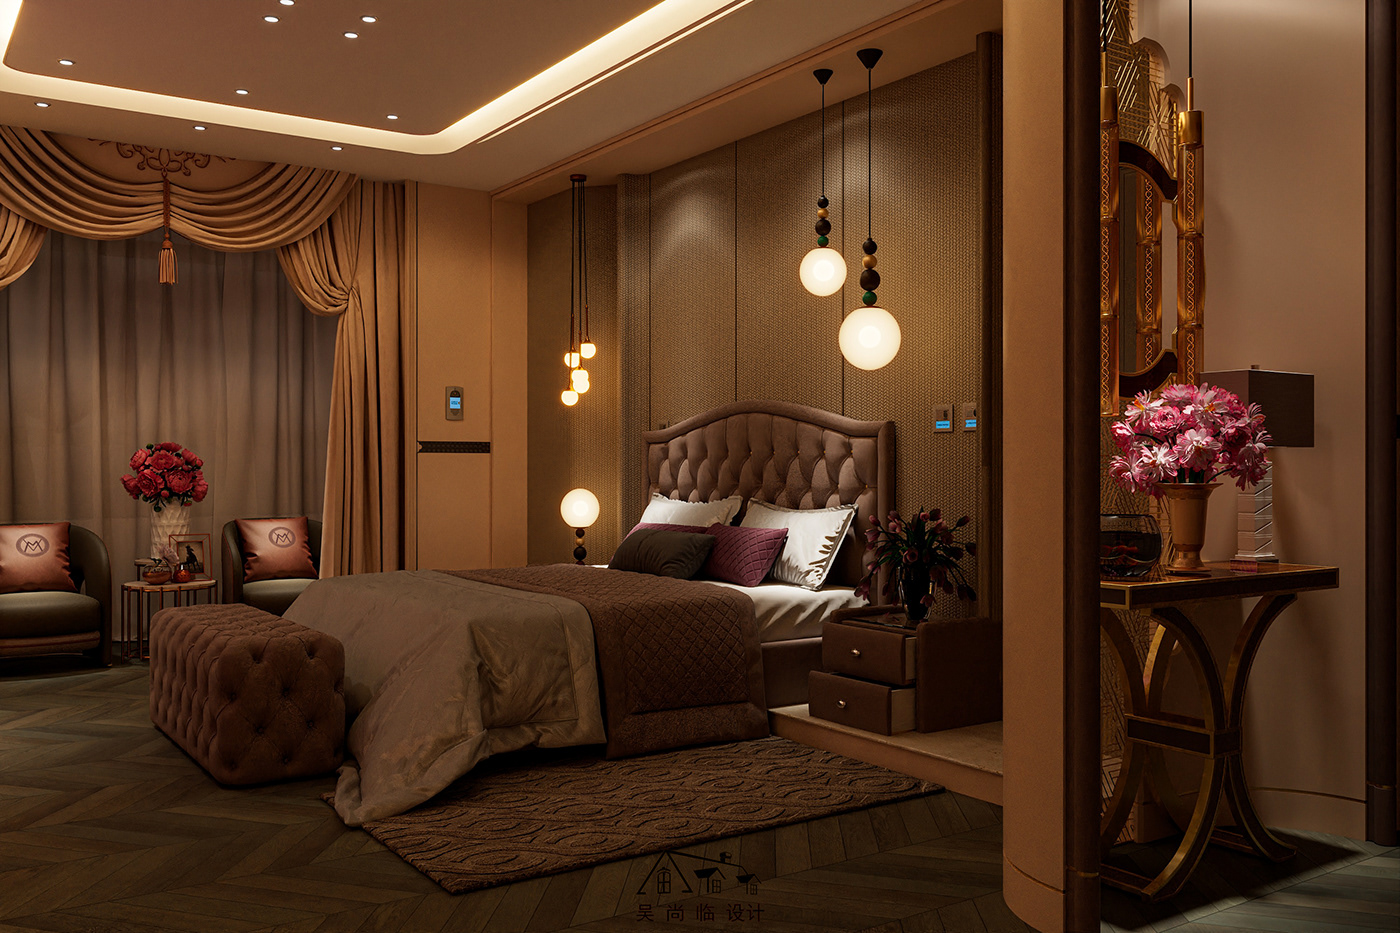 3D 3ds max indoor interior design  modern Render vray